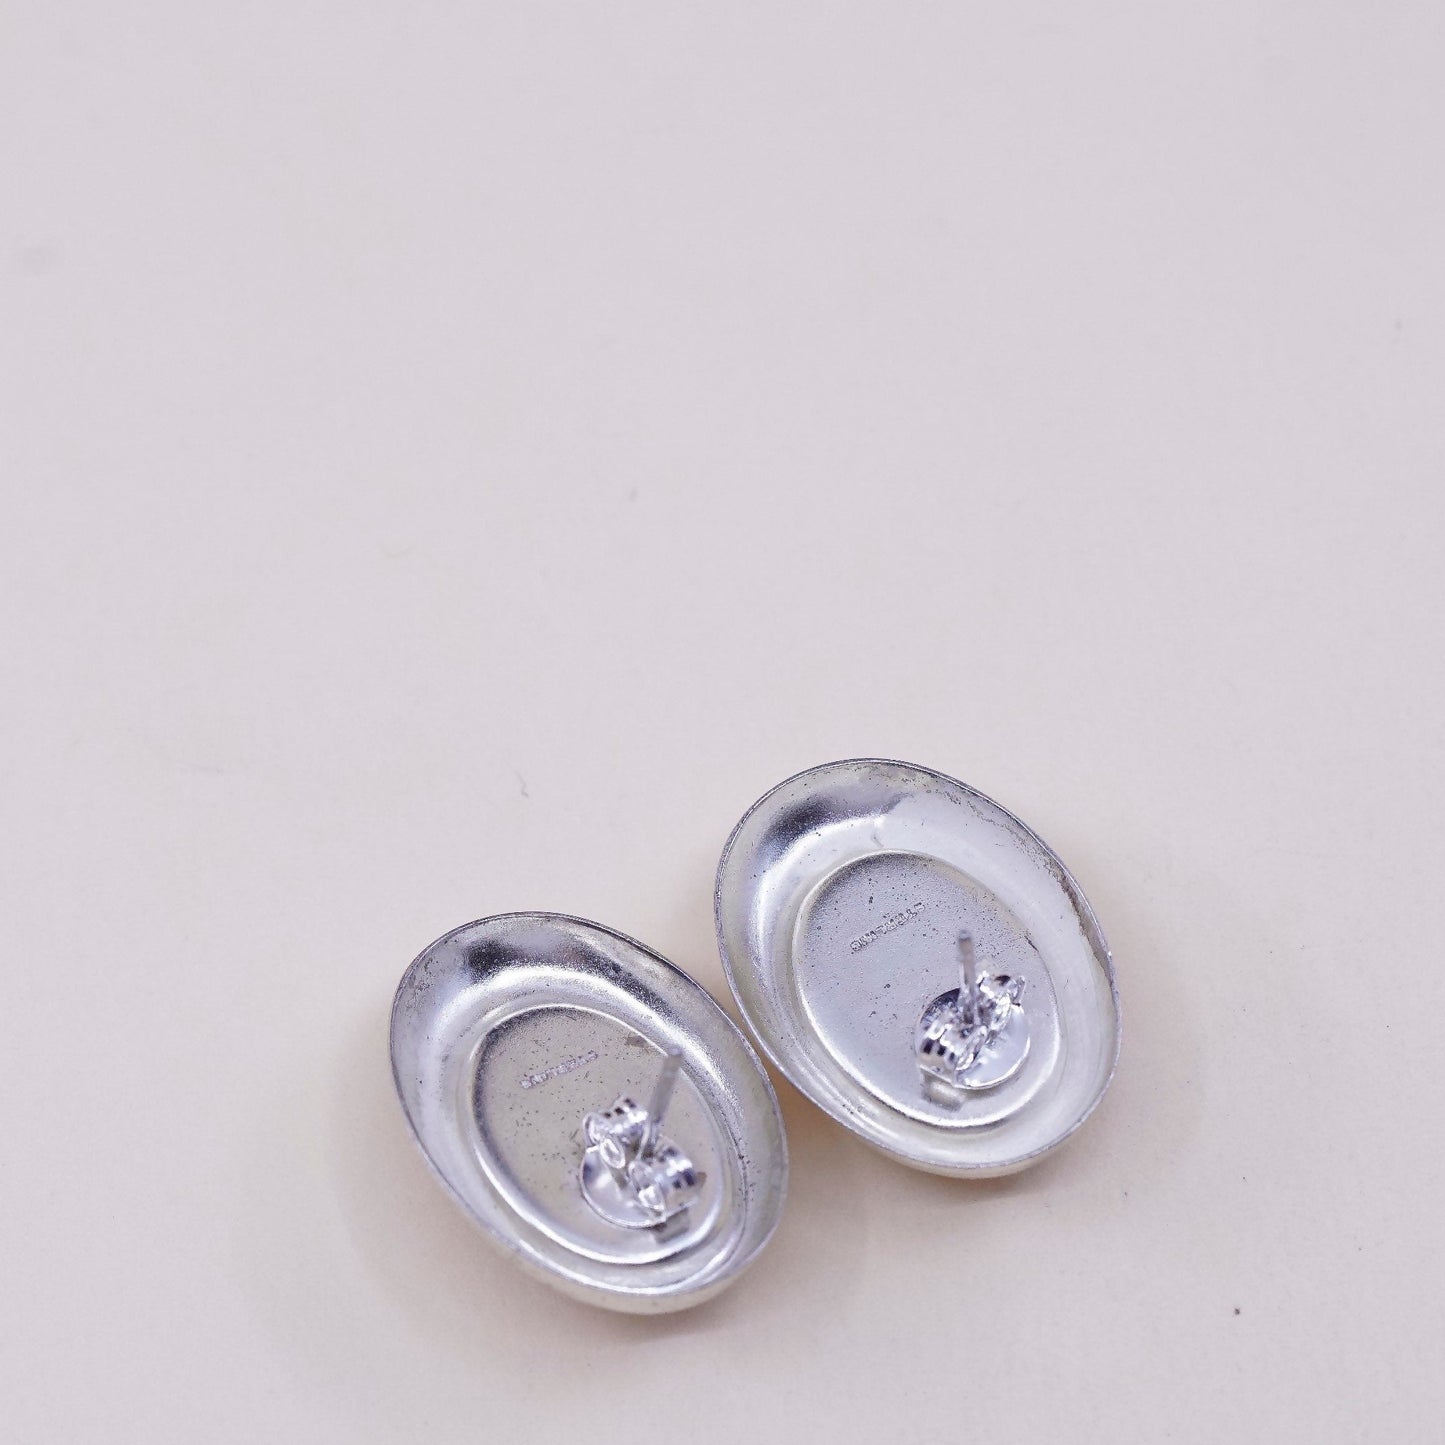 VTG Sterling silver handmade earrings, Native American 925 studs W/ pink MOP